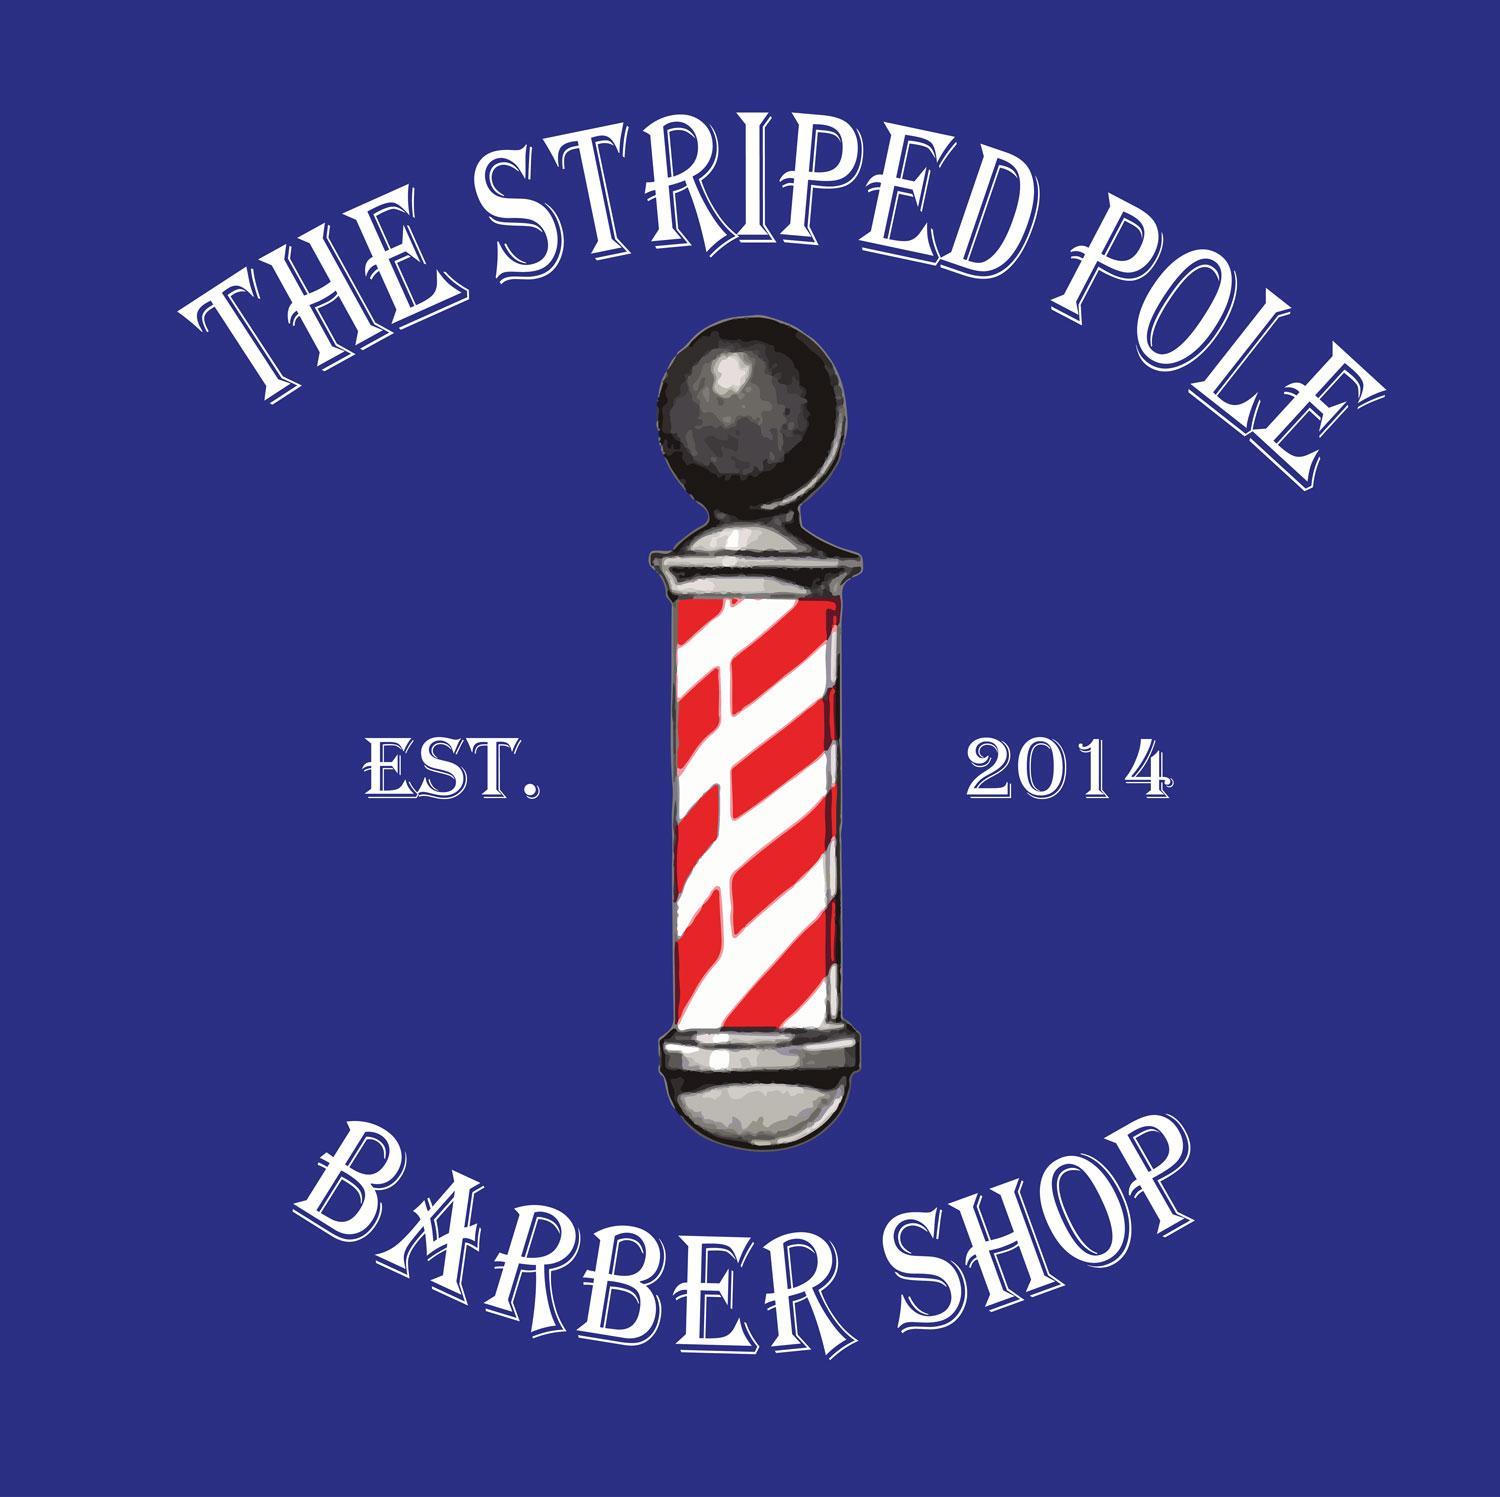 Traditional professional barbershop.